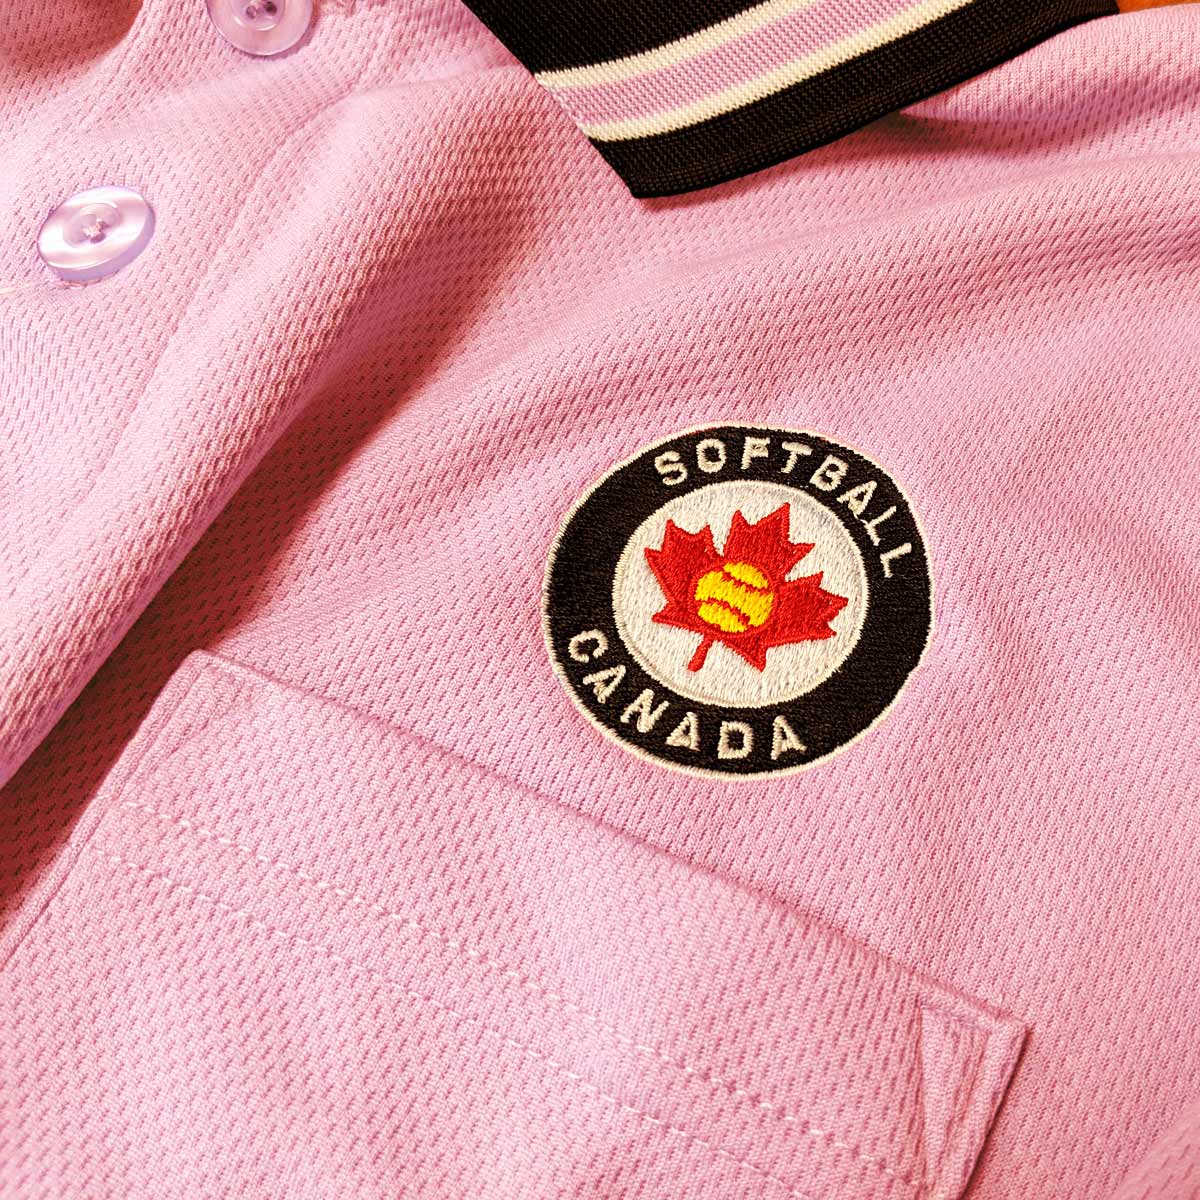 Softball Canada Performance Mesh Umpire Shirt - Pink